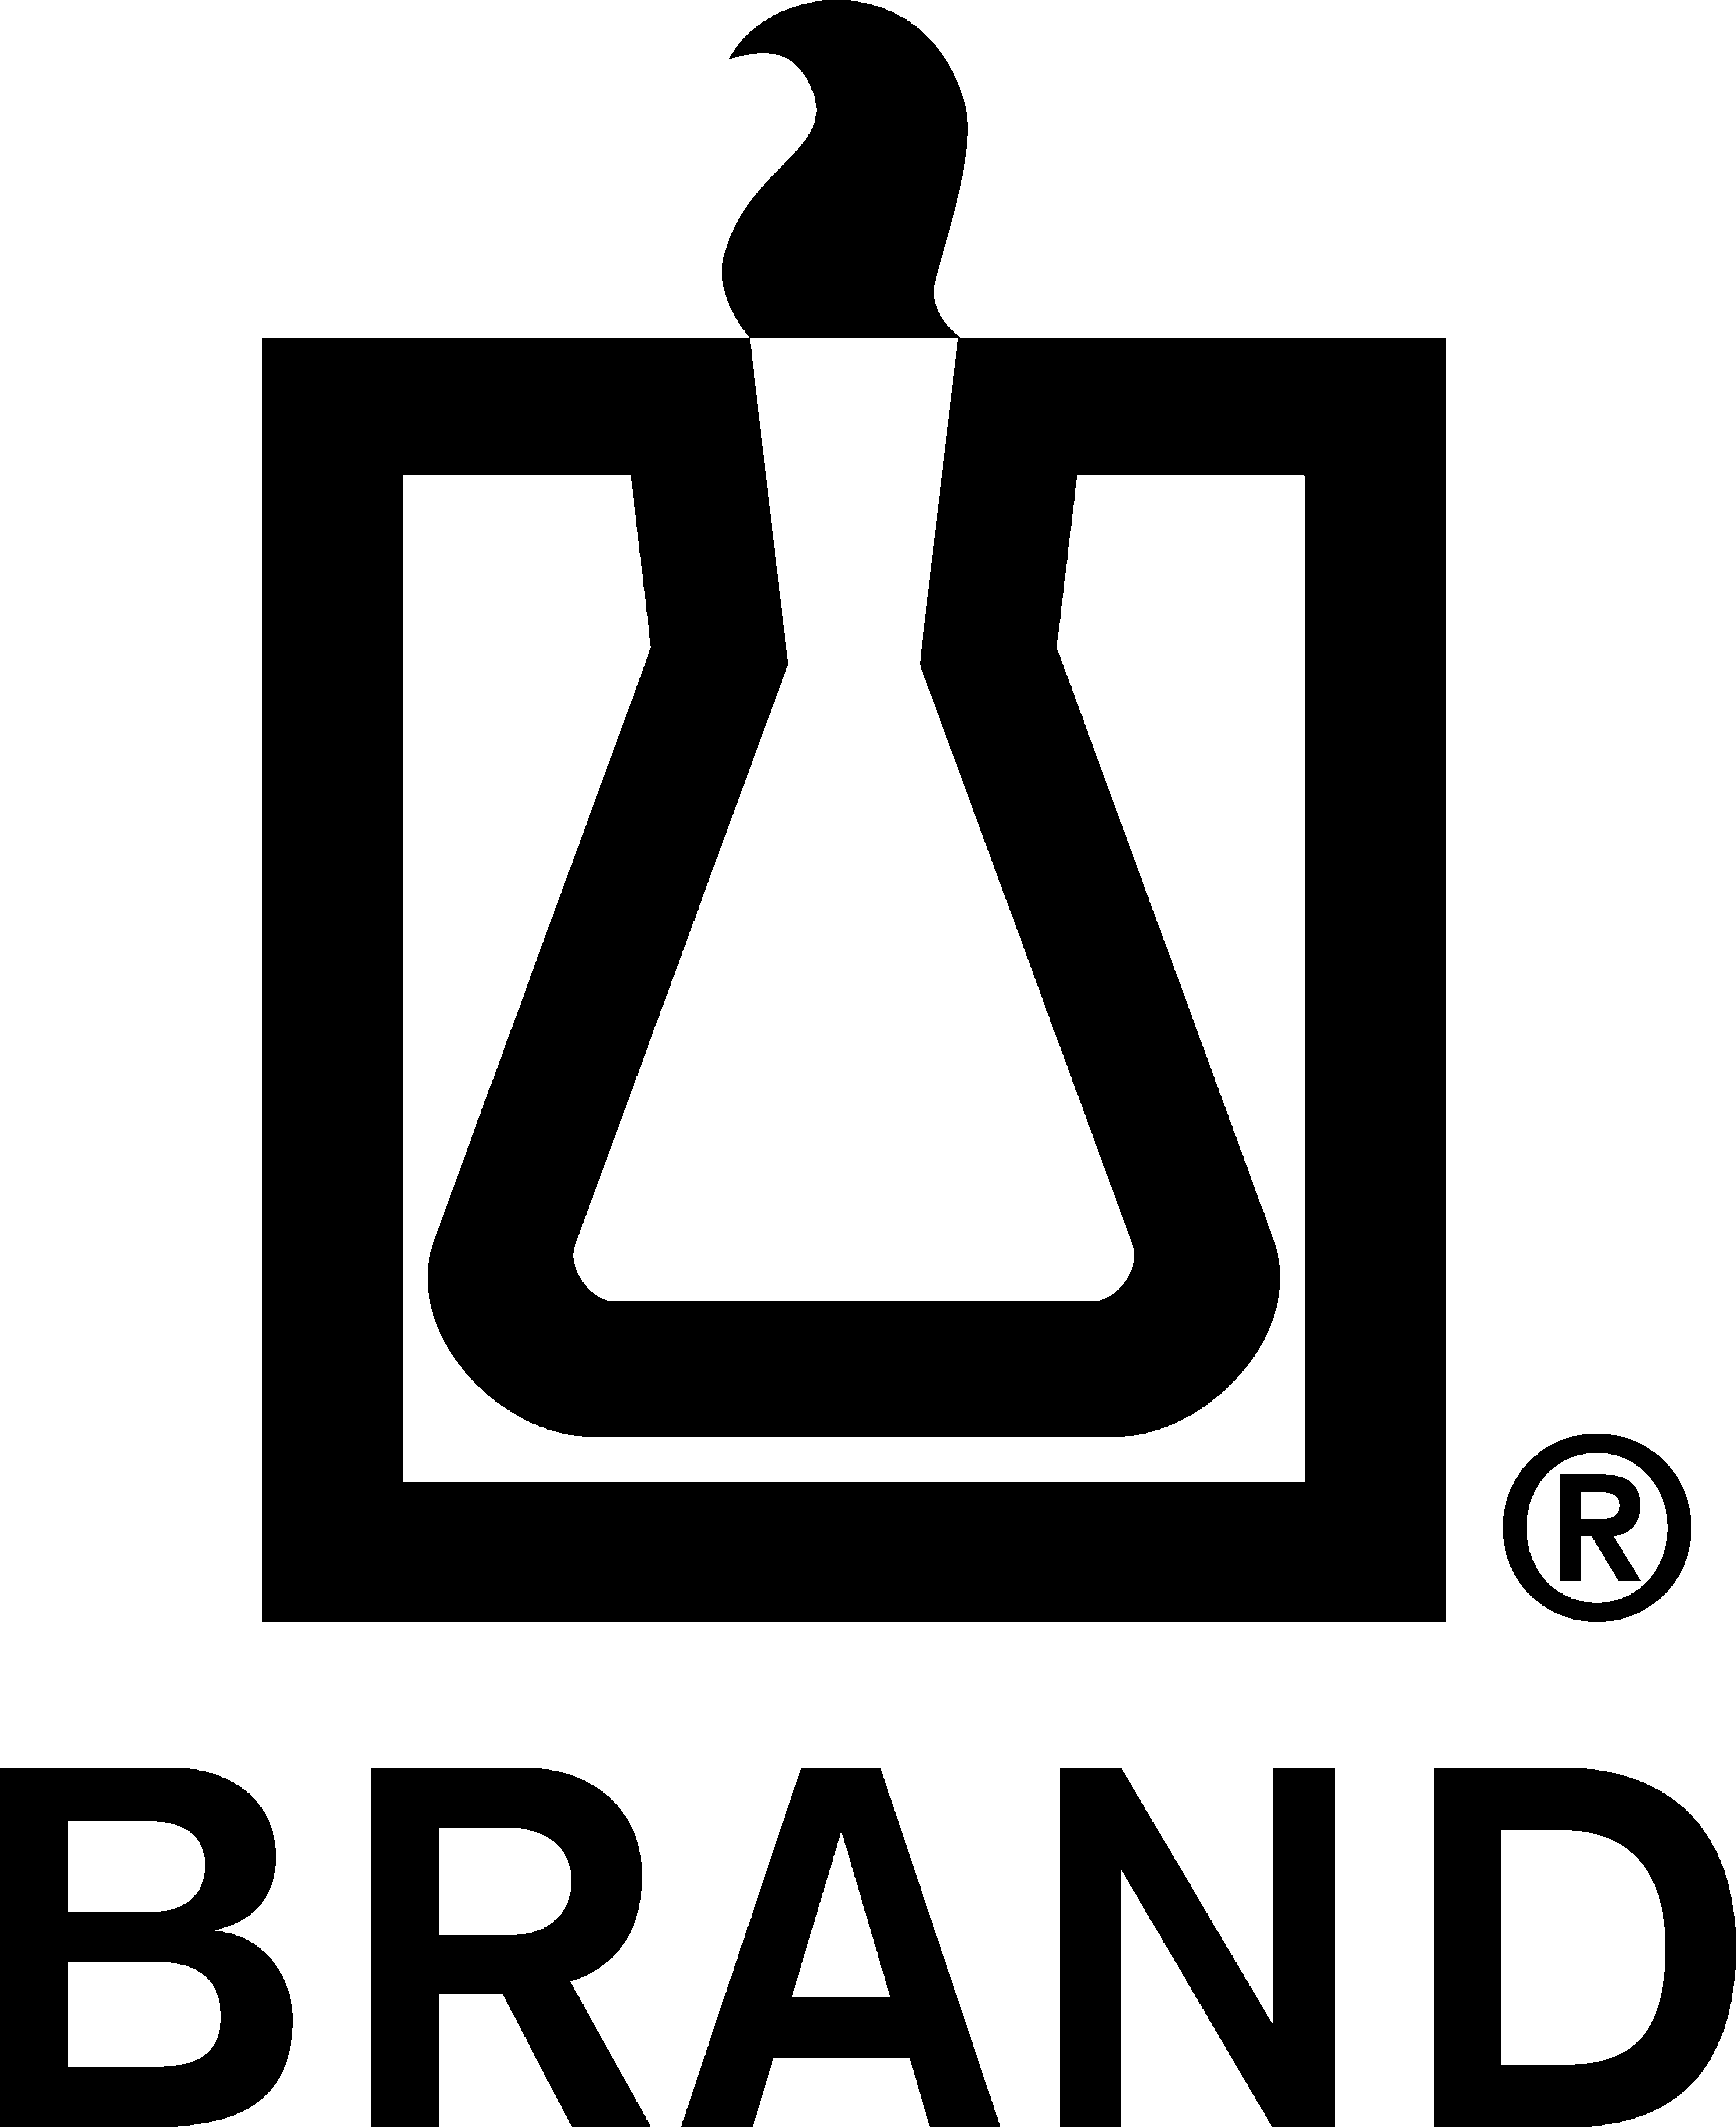 BRAND logo